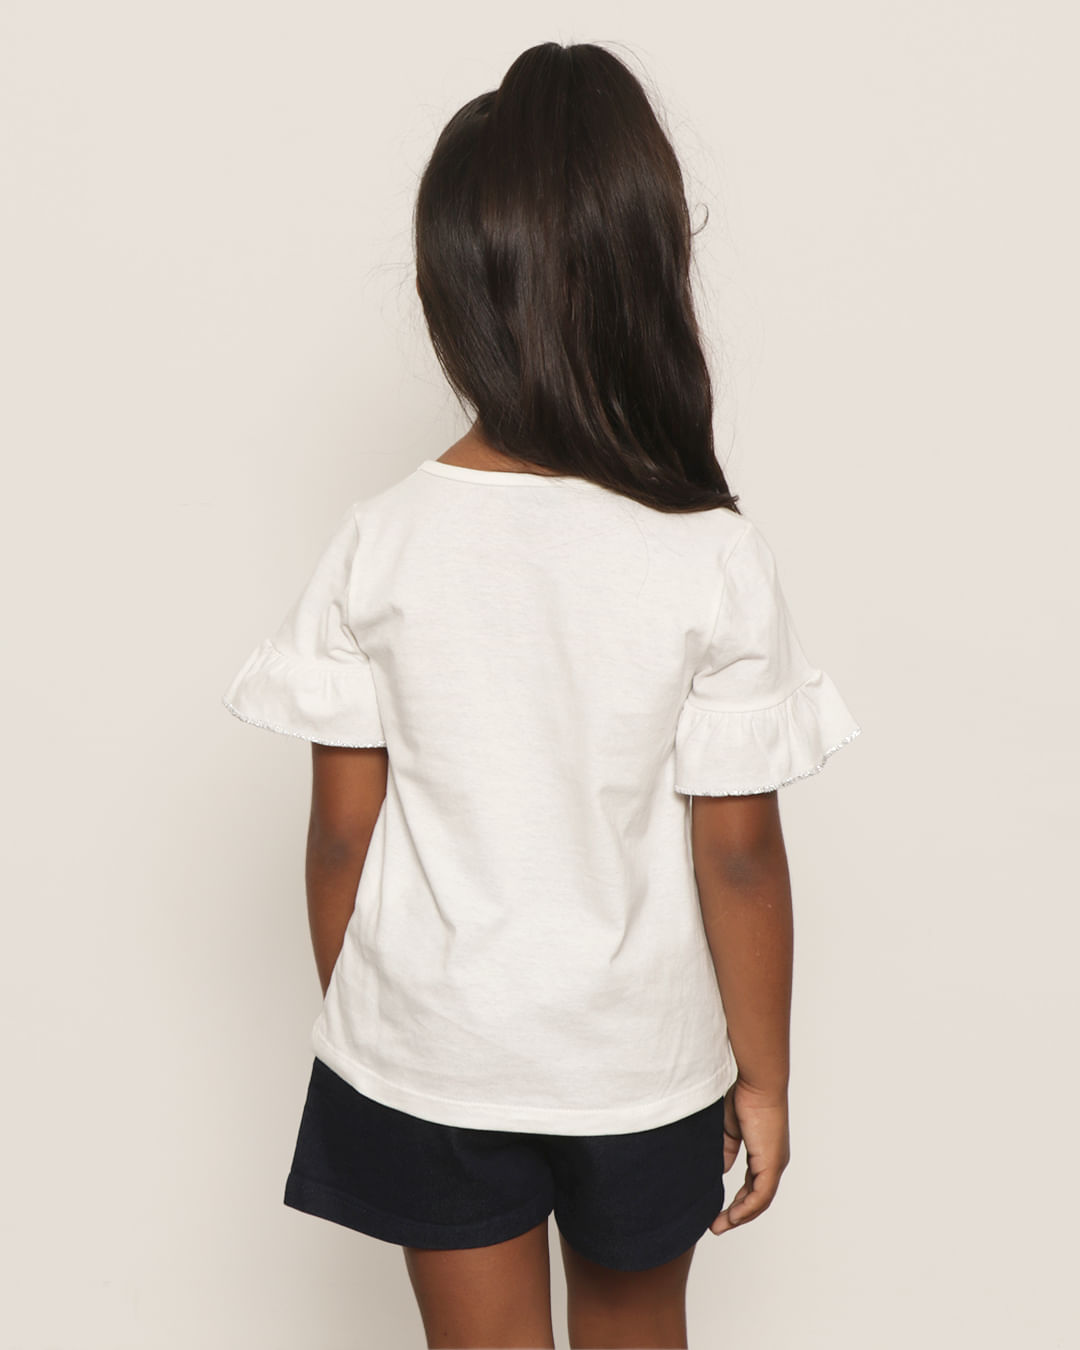 Camiseta-Infantil-Menina-Disney---Moana-com-Estampa-Frontal-Manga-Curta-Decote-Redonda-Off-White